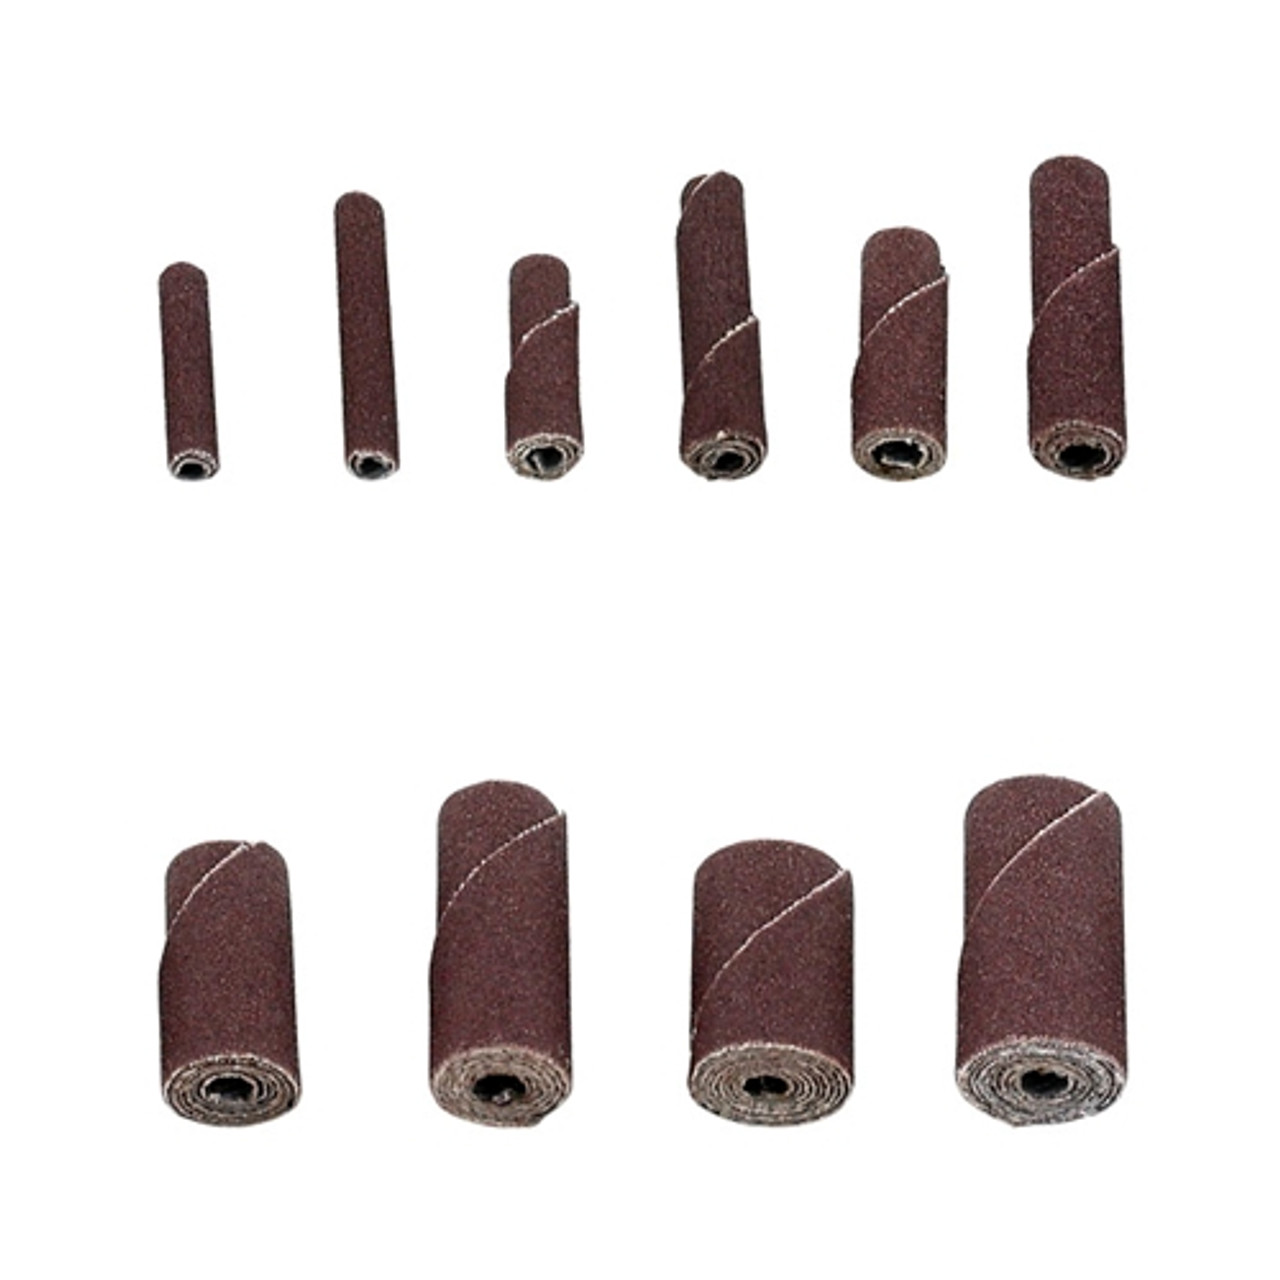 Abrasive Cartridge Rolls - 1/2" x 1" x 1/8", 120 Grit